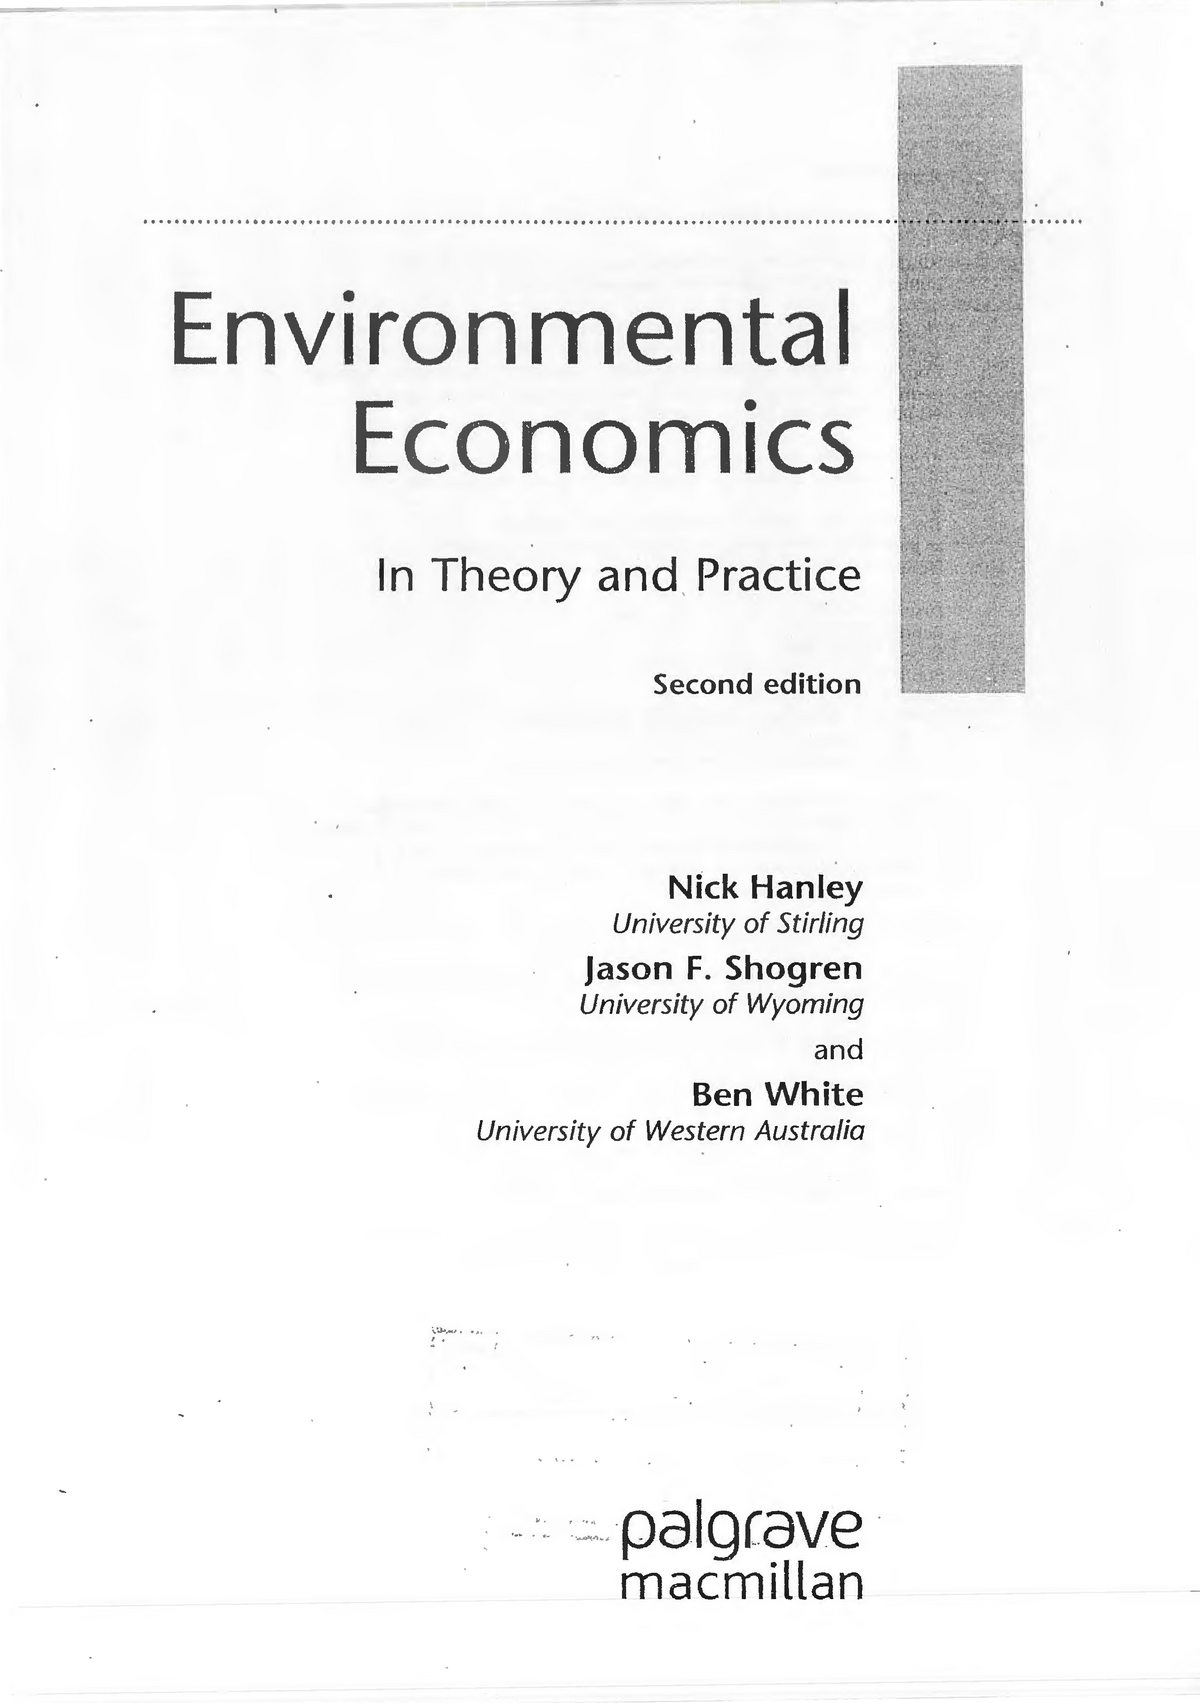 environmental economics phd lse